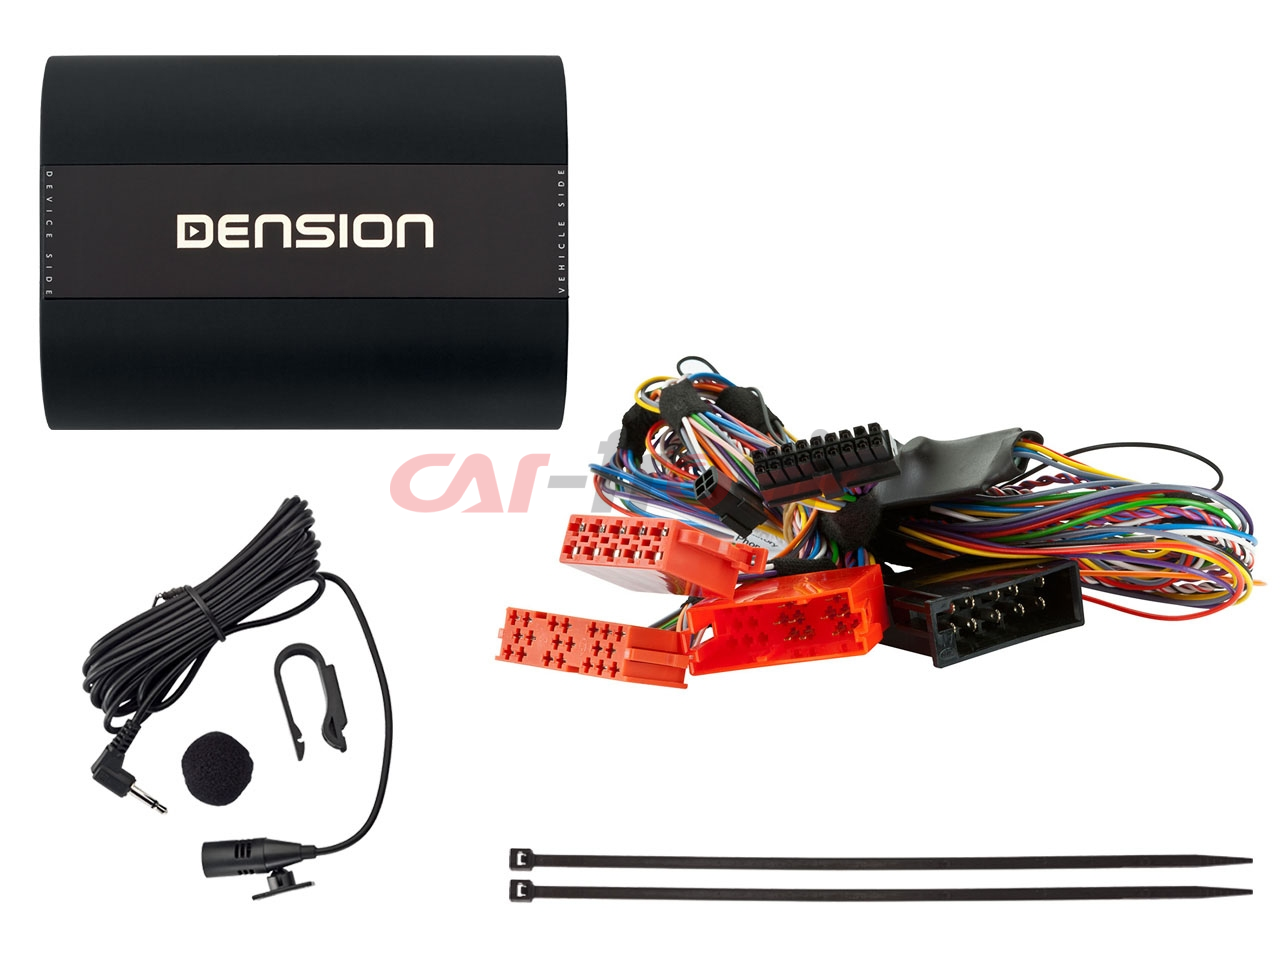 Dension Pro BT,AUX,USB,iPod,iPhone,ID3 - Audi A4,A3,A6,A8,TT